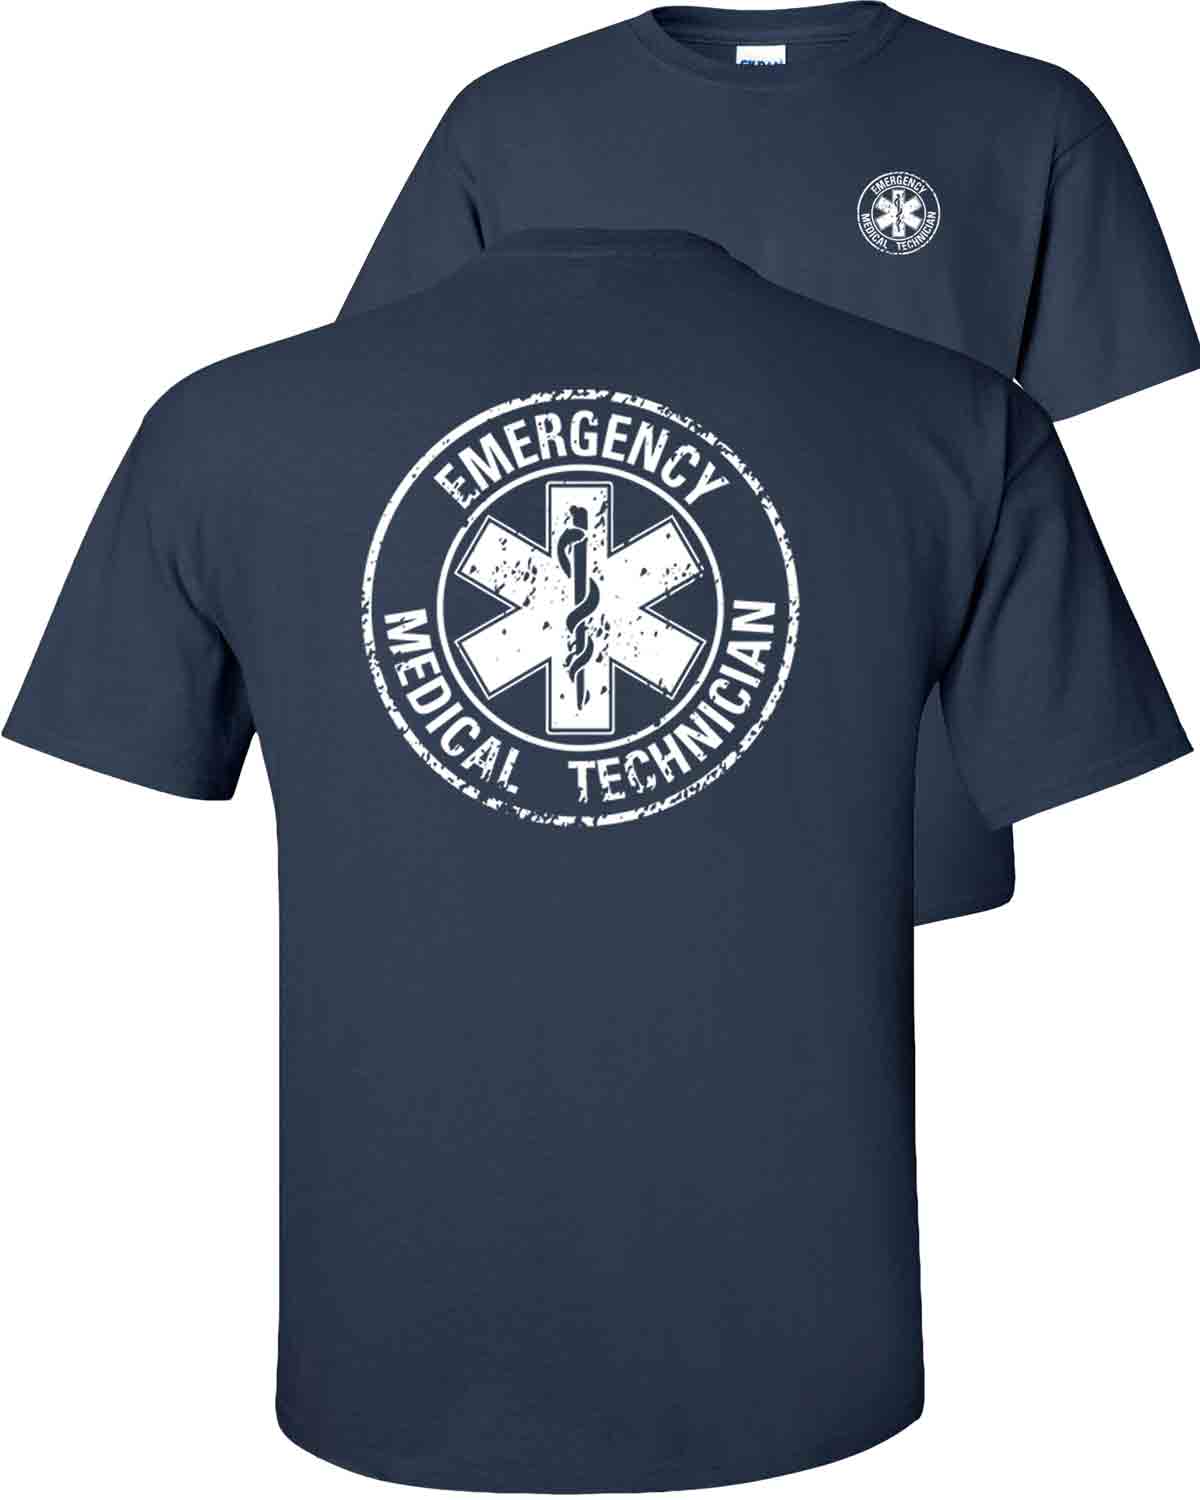 EMT-emergency-t-shirt-medical-technician-circle-distressed-navy1.jpg